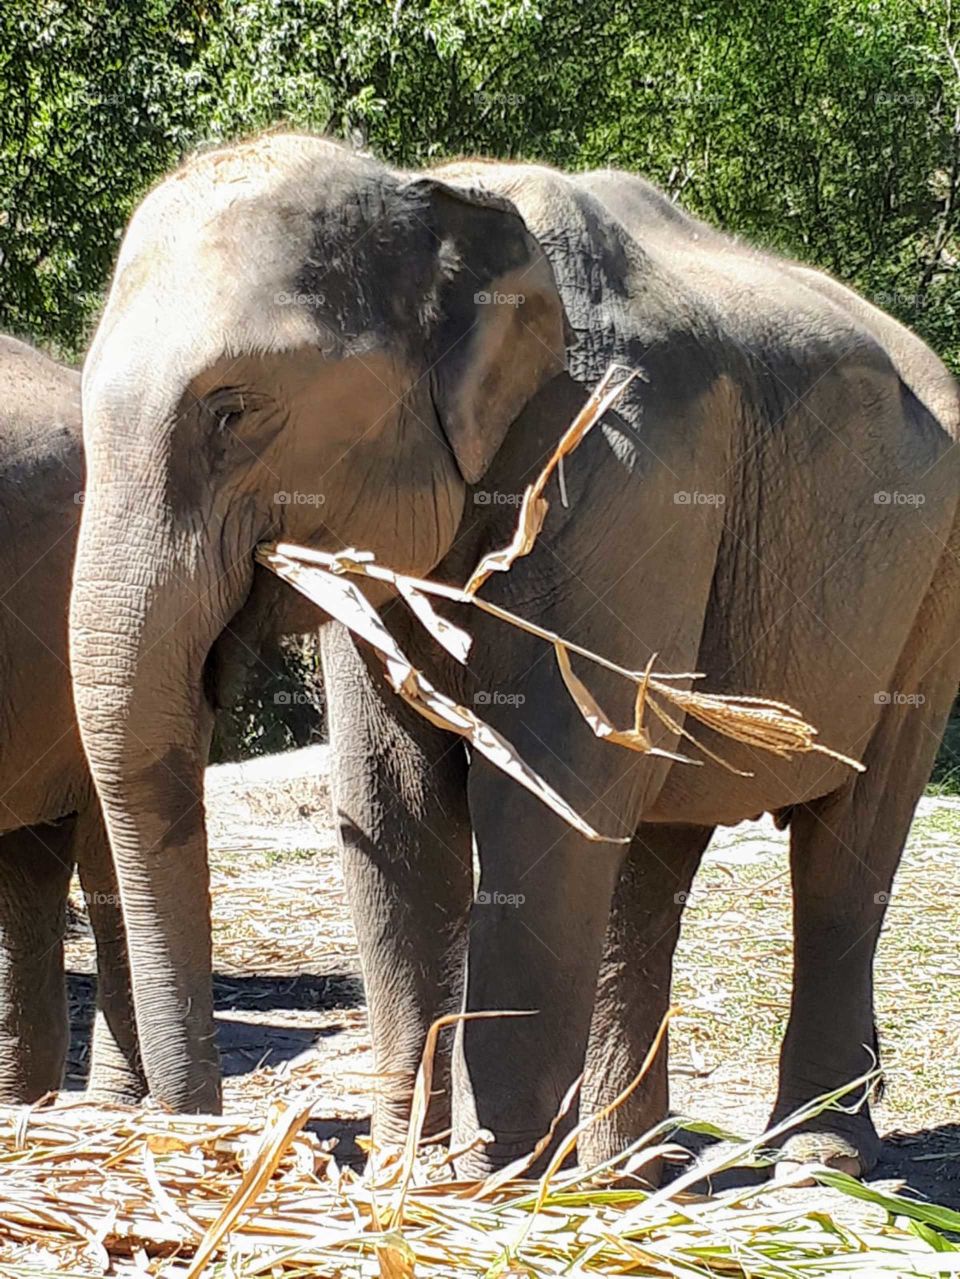 Lunchtime! A graceful female Asian elephant enjoys some sugarcane. Thailand. 